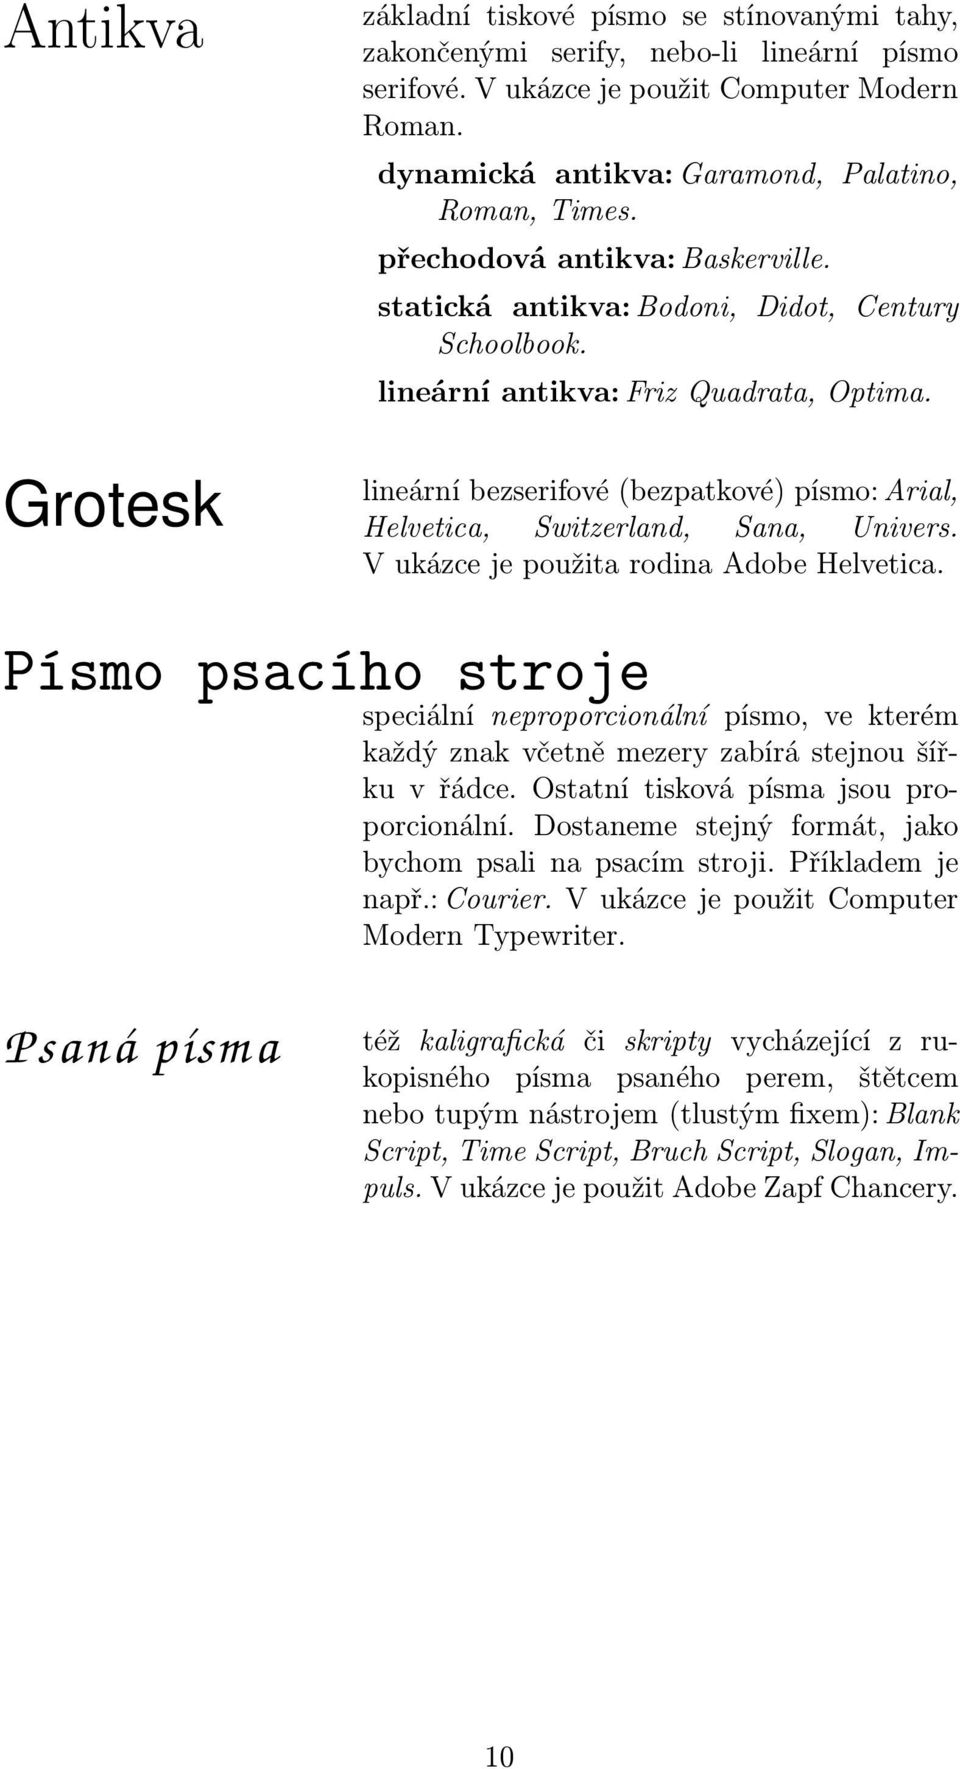 Grotesk lineární bezserifové(bezpatkové) písmo: Arial, Helvetica, Switzerland, Sana, Univers. V ukázce je použita rodina Adobe Helvetica.